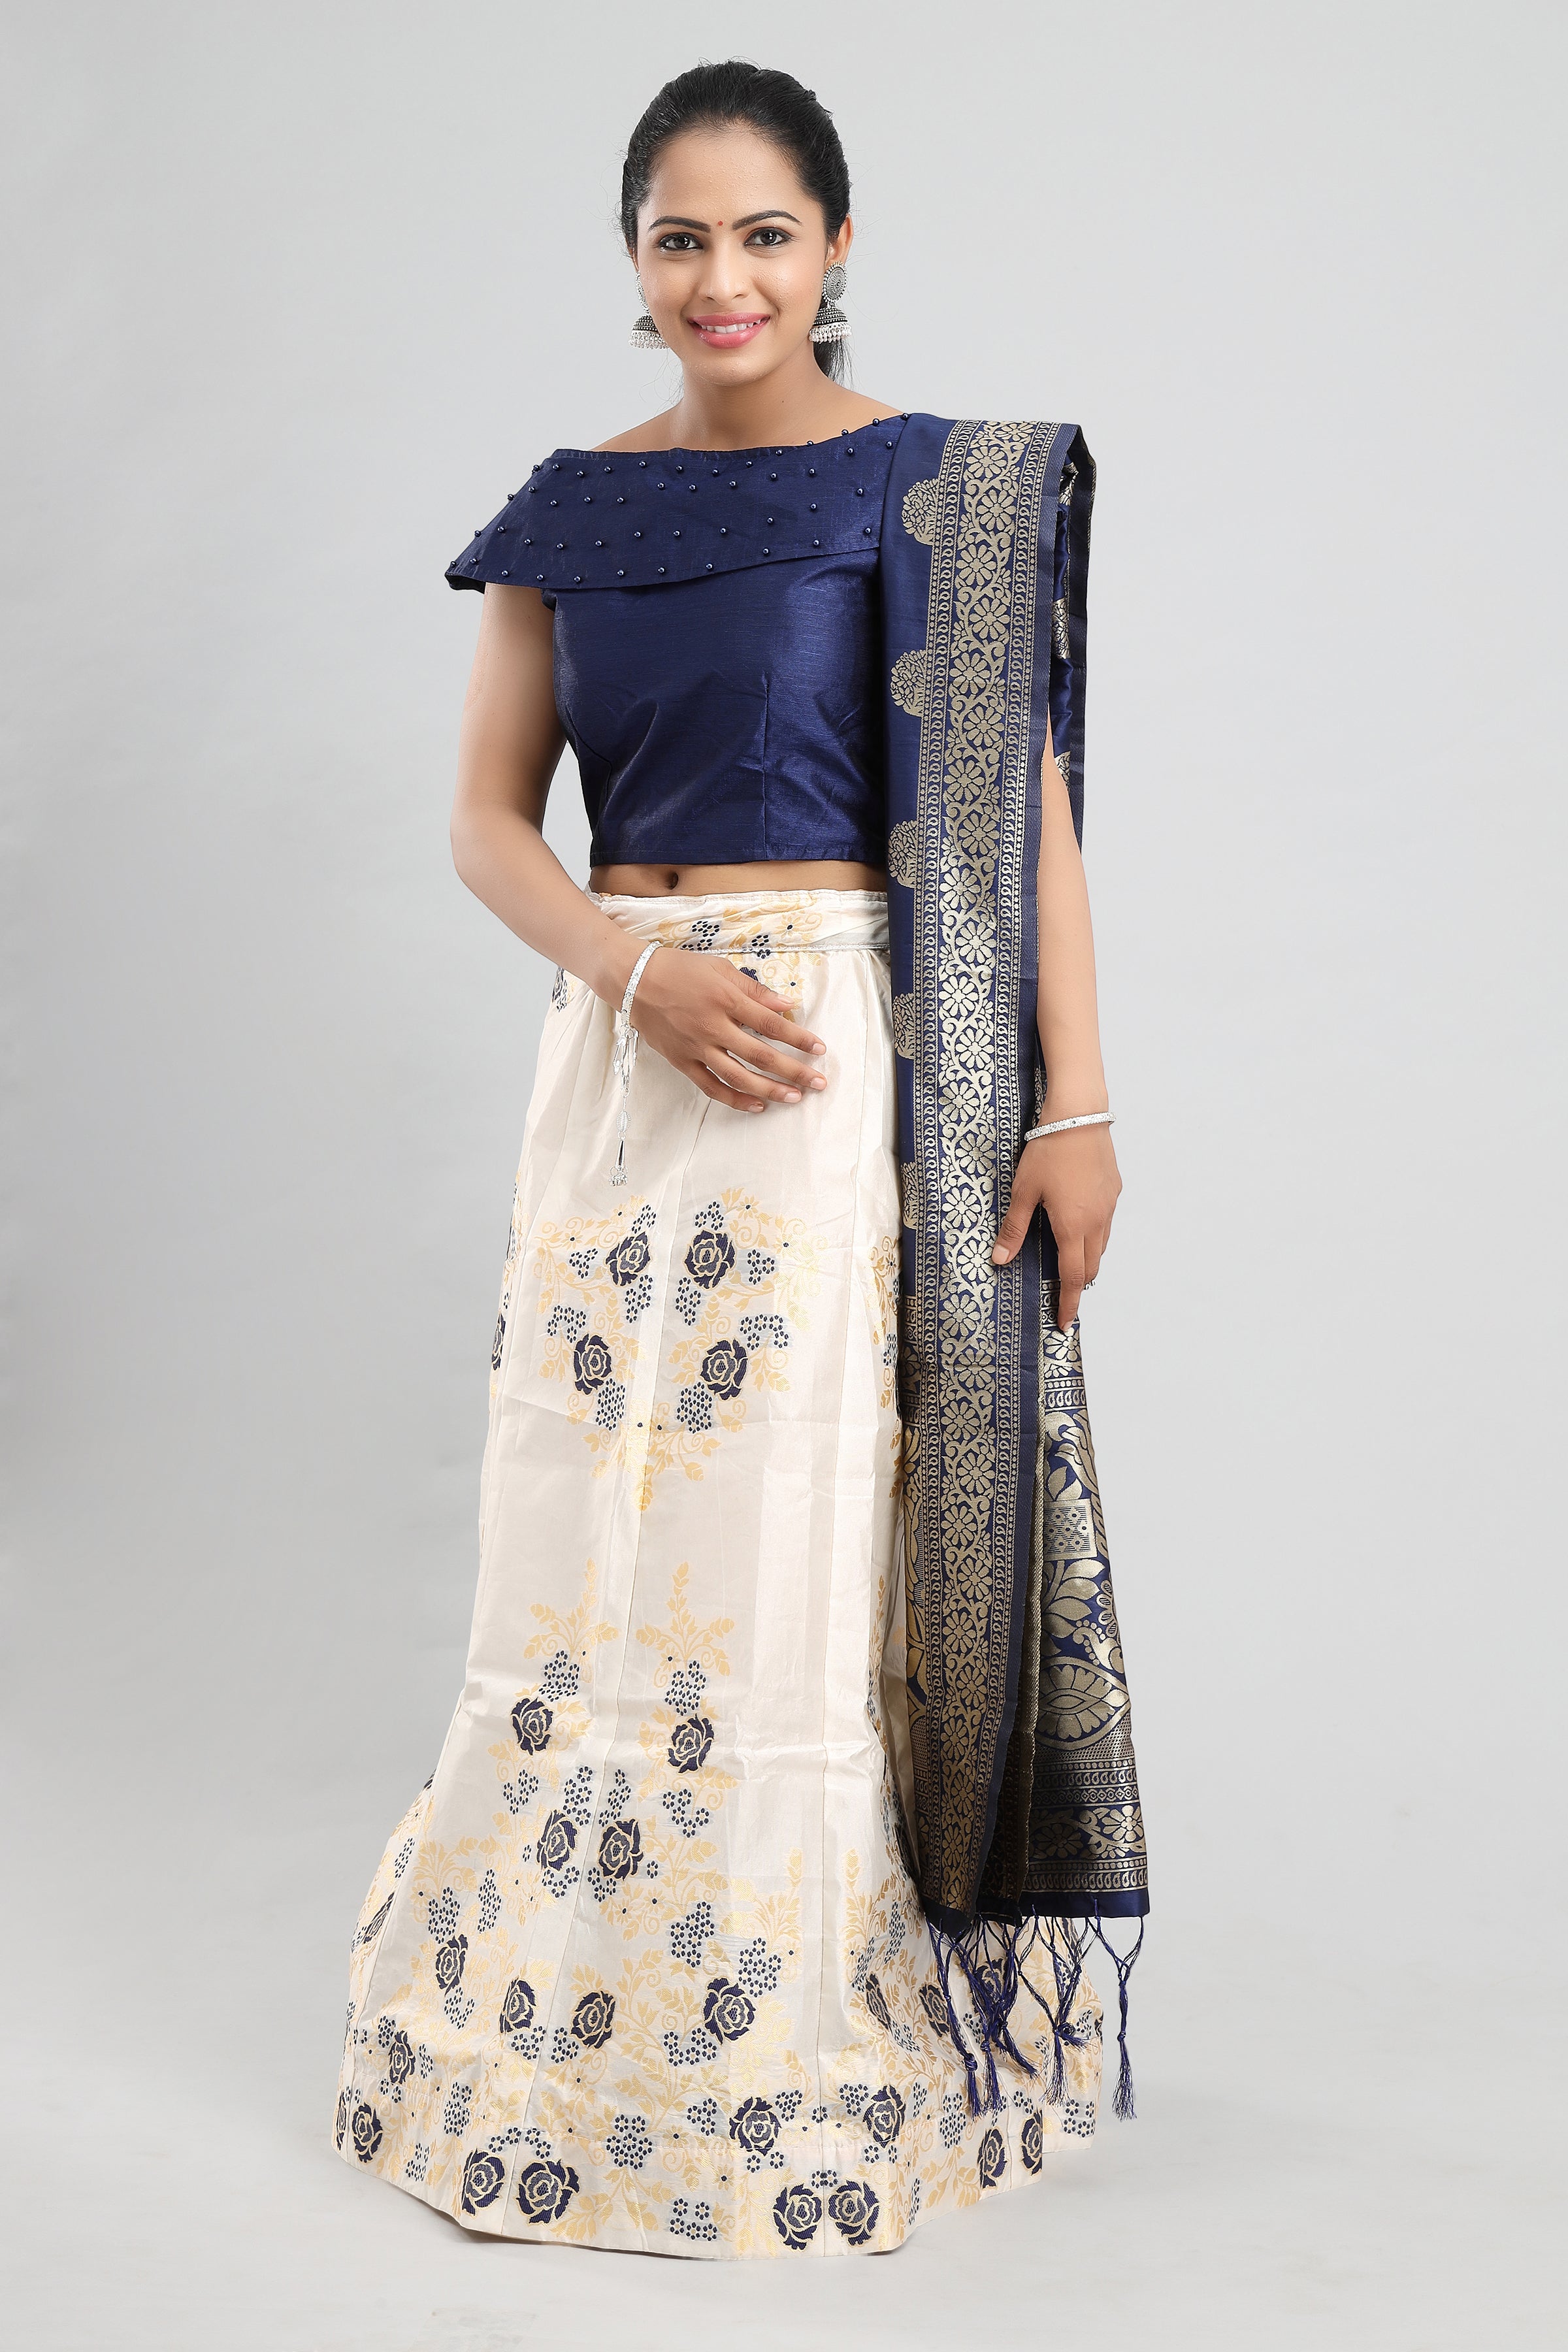 Women's Banarasi Blue On White Floral Brocade Lehenga With Ready Made Blouse, Dupatta, Cane And Lining. - MANOHARA